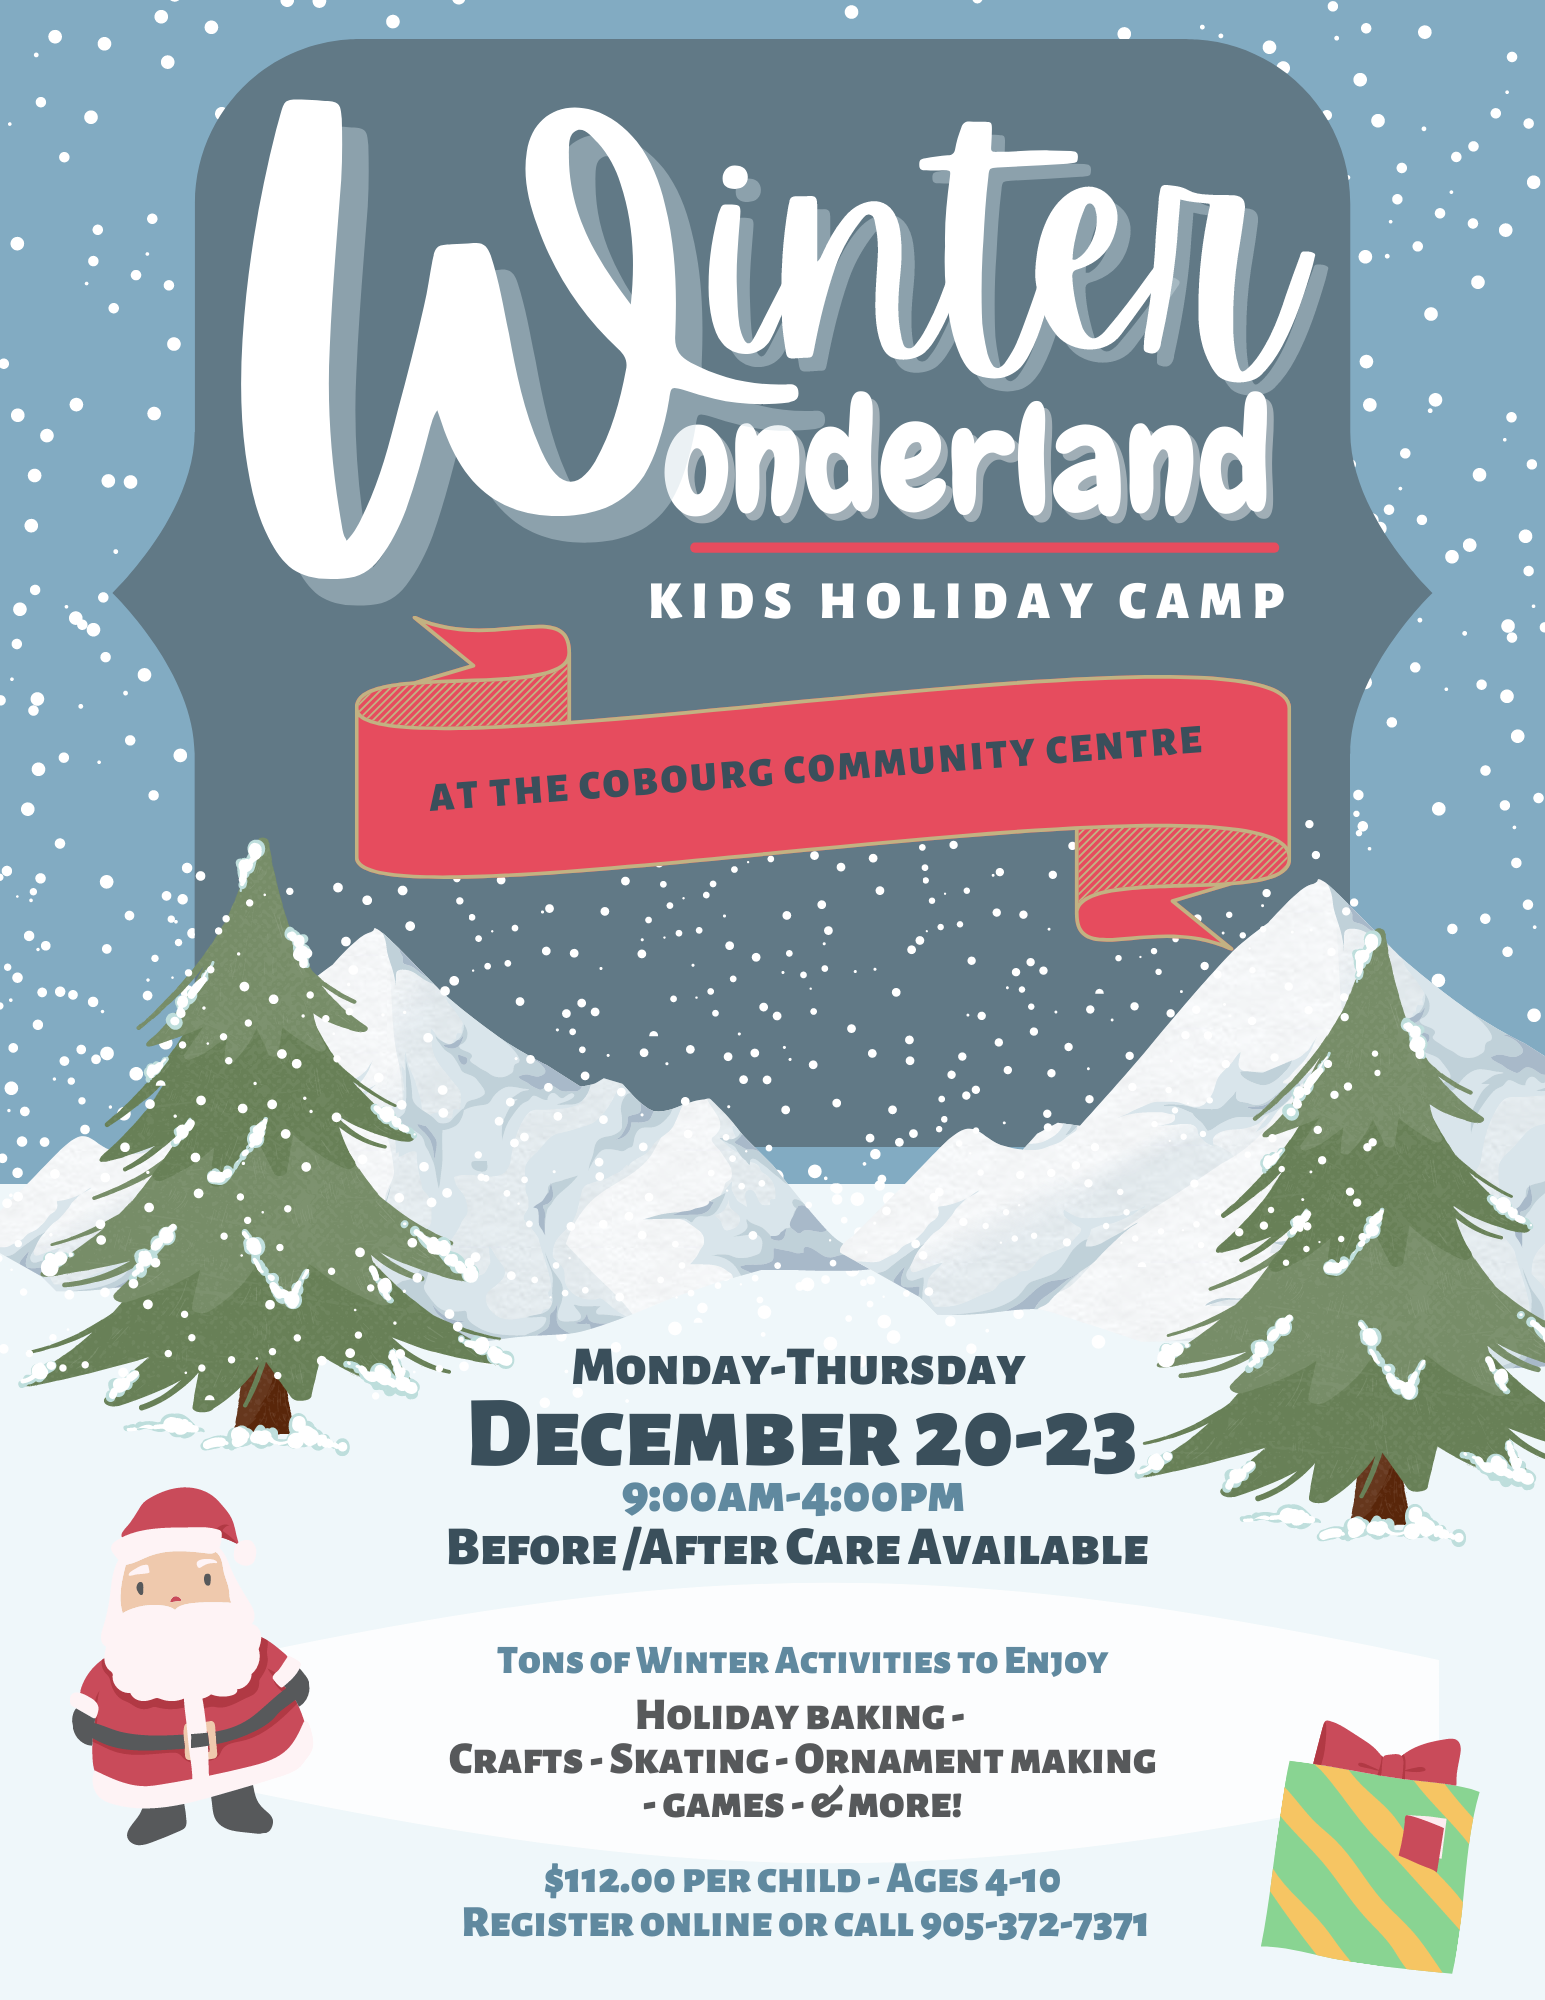 Winter wonderland kids holiday camp flyer 